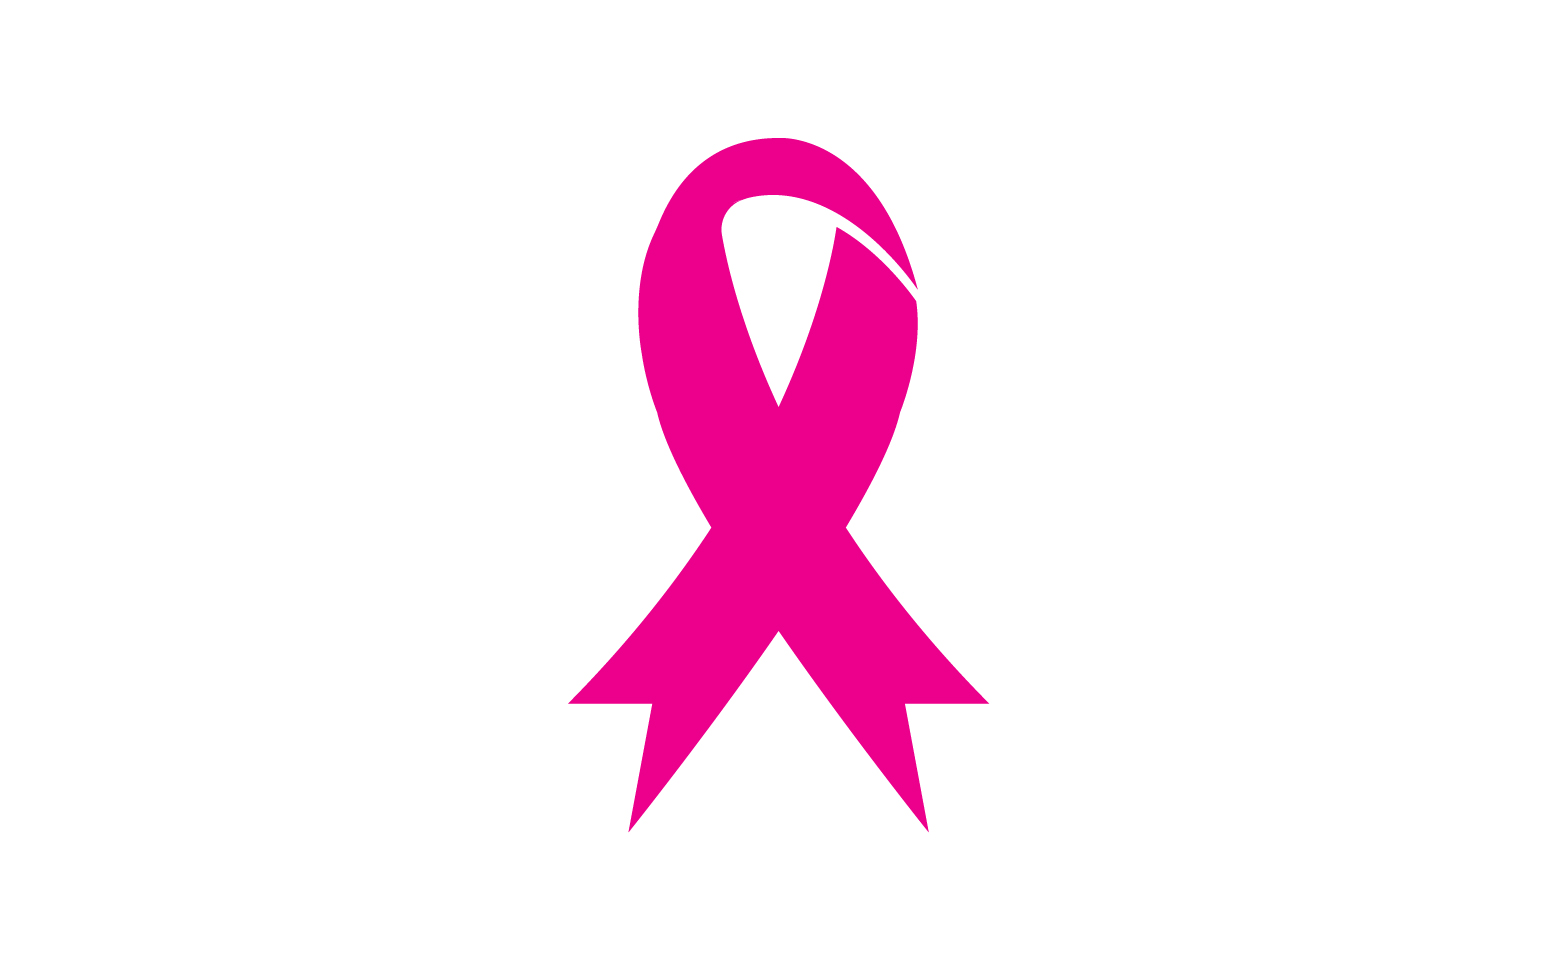 Ribbon pink icon logo element version v3